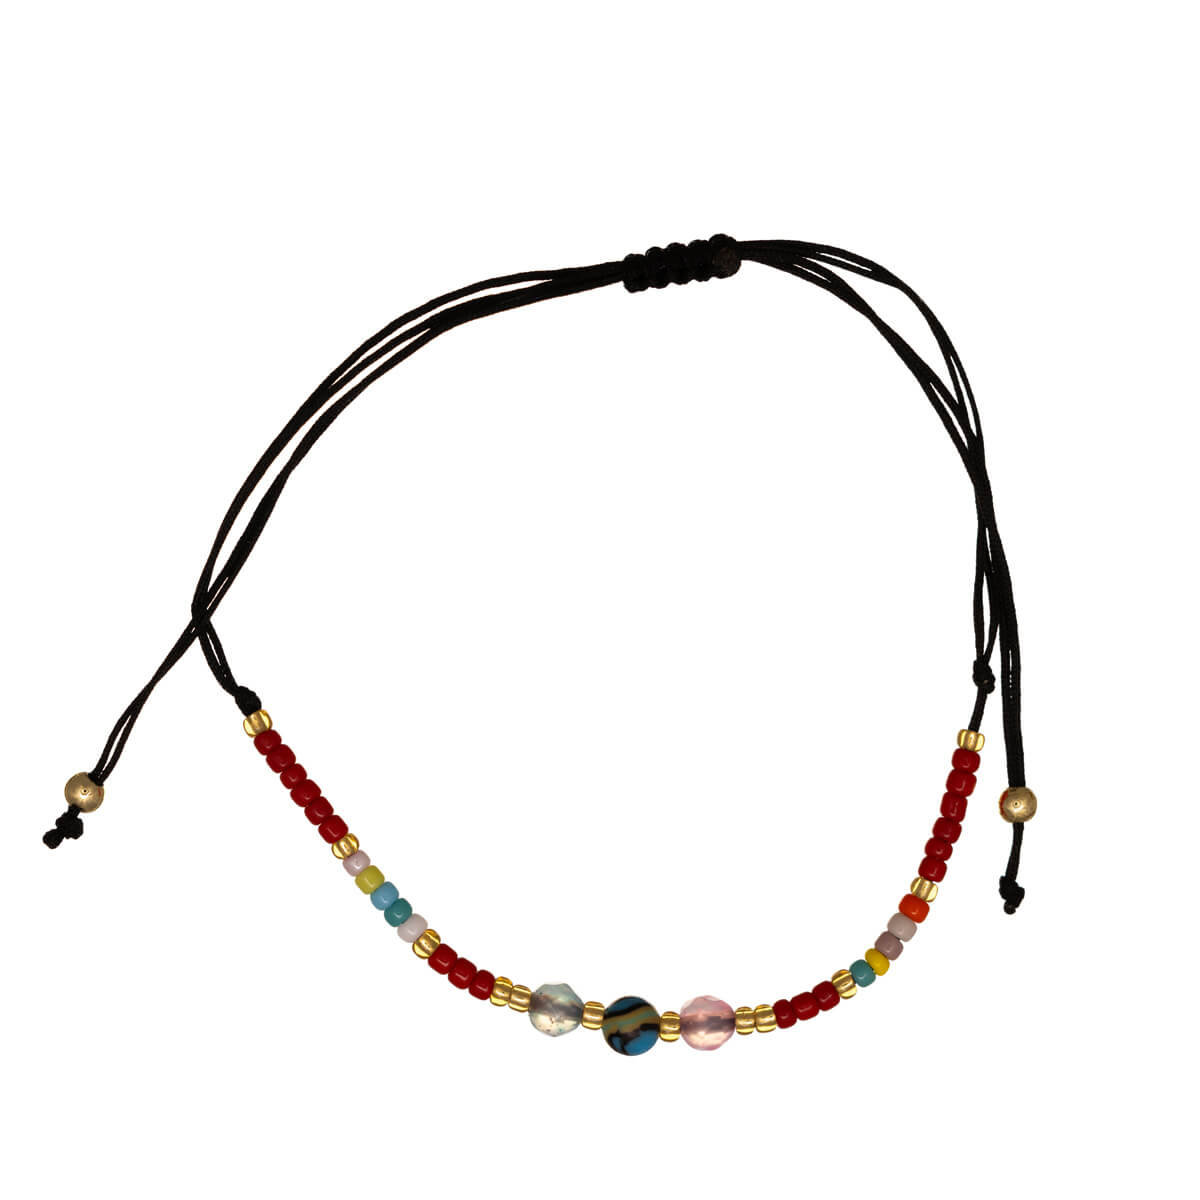 Adjustable bracelet with three glass beads